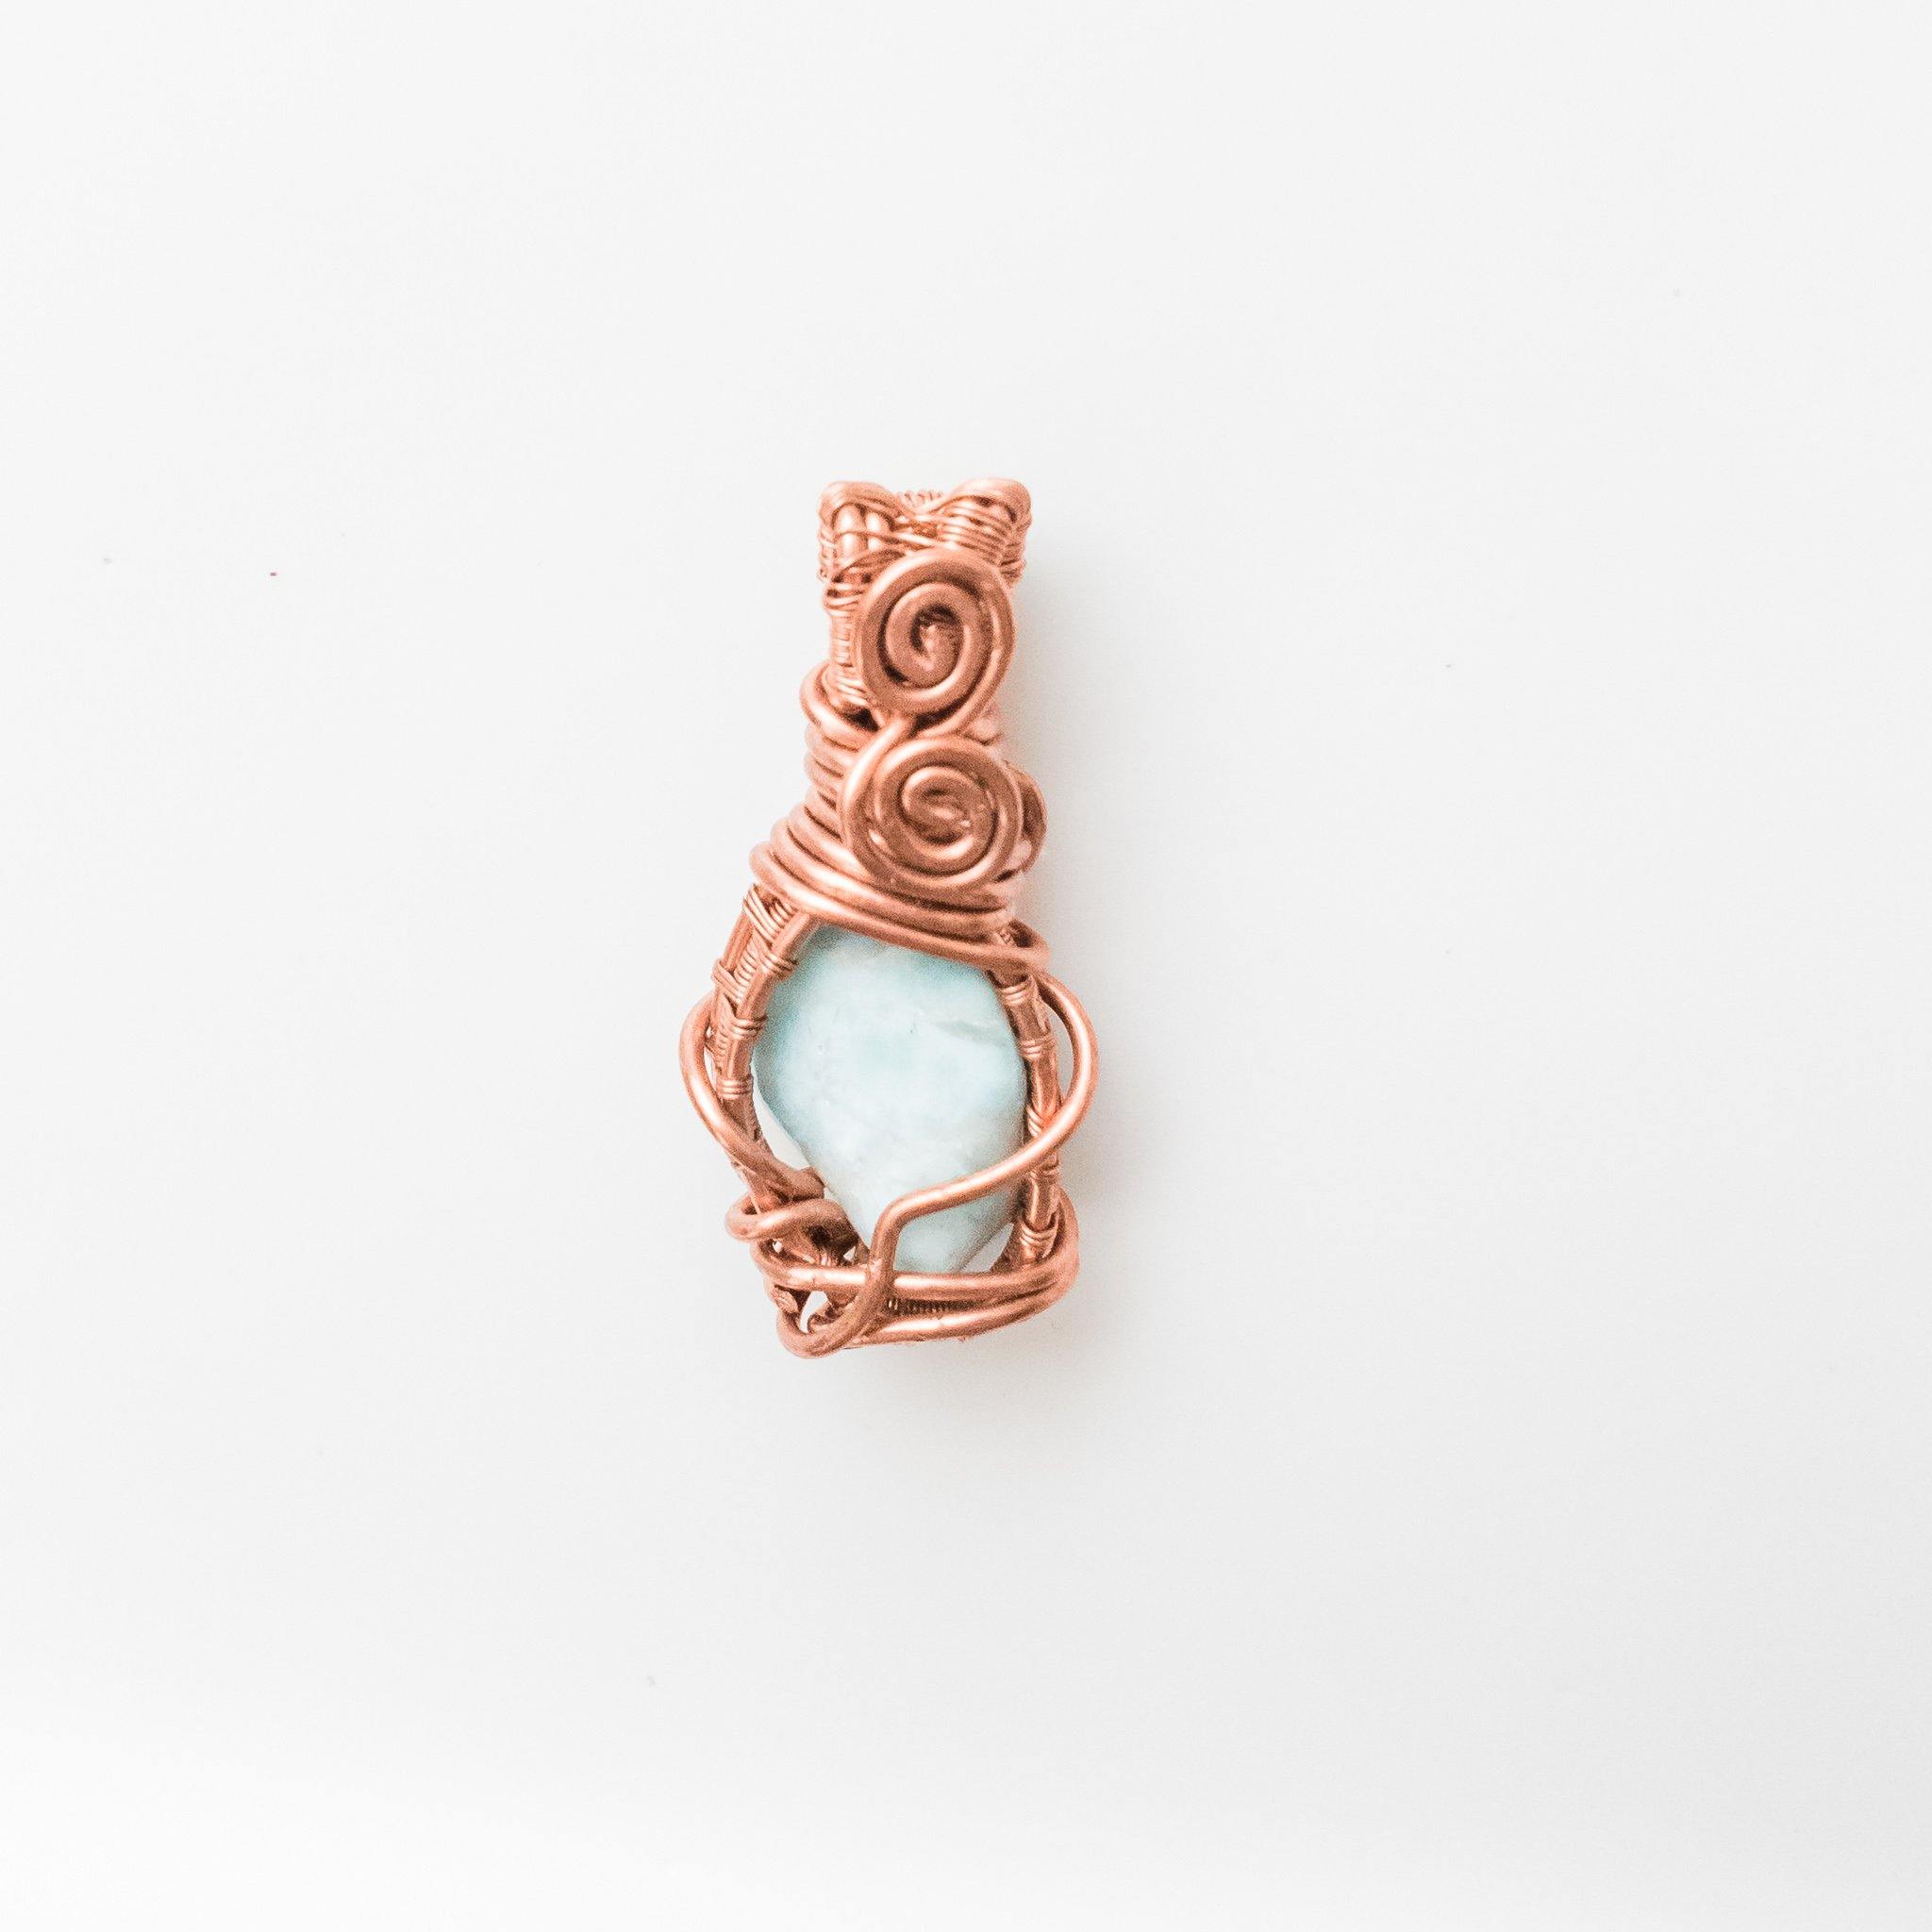 Laguna Collection - Larimar Pendant weaved in Antique Copper - front view - BellaChel Jeweler